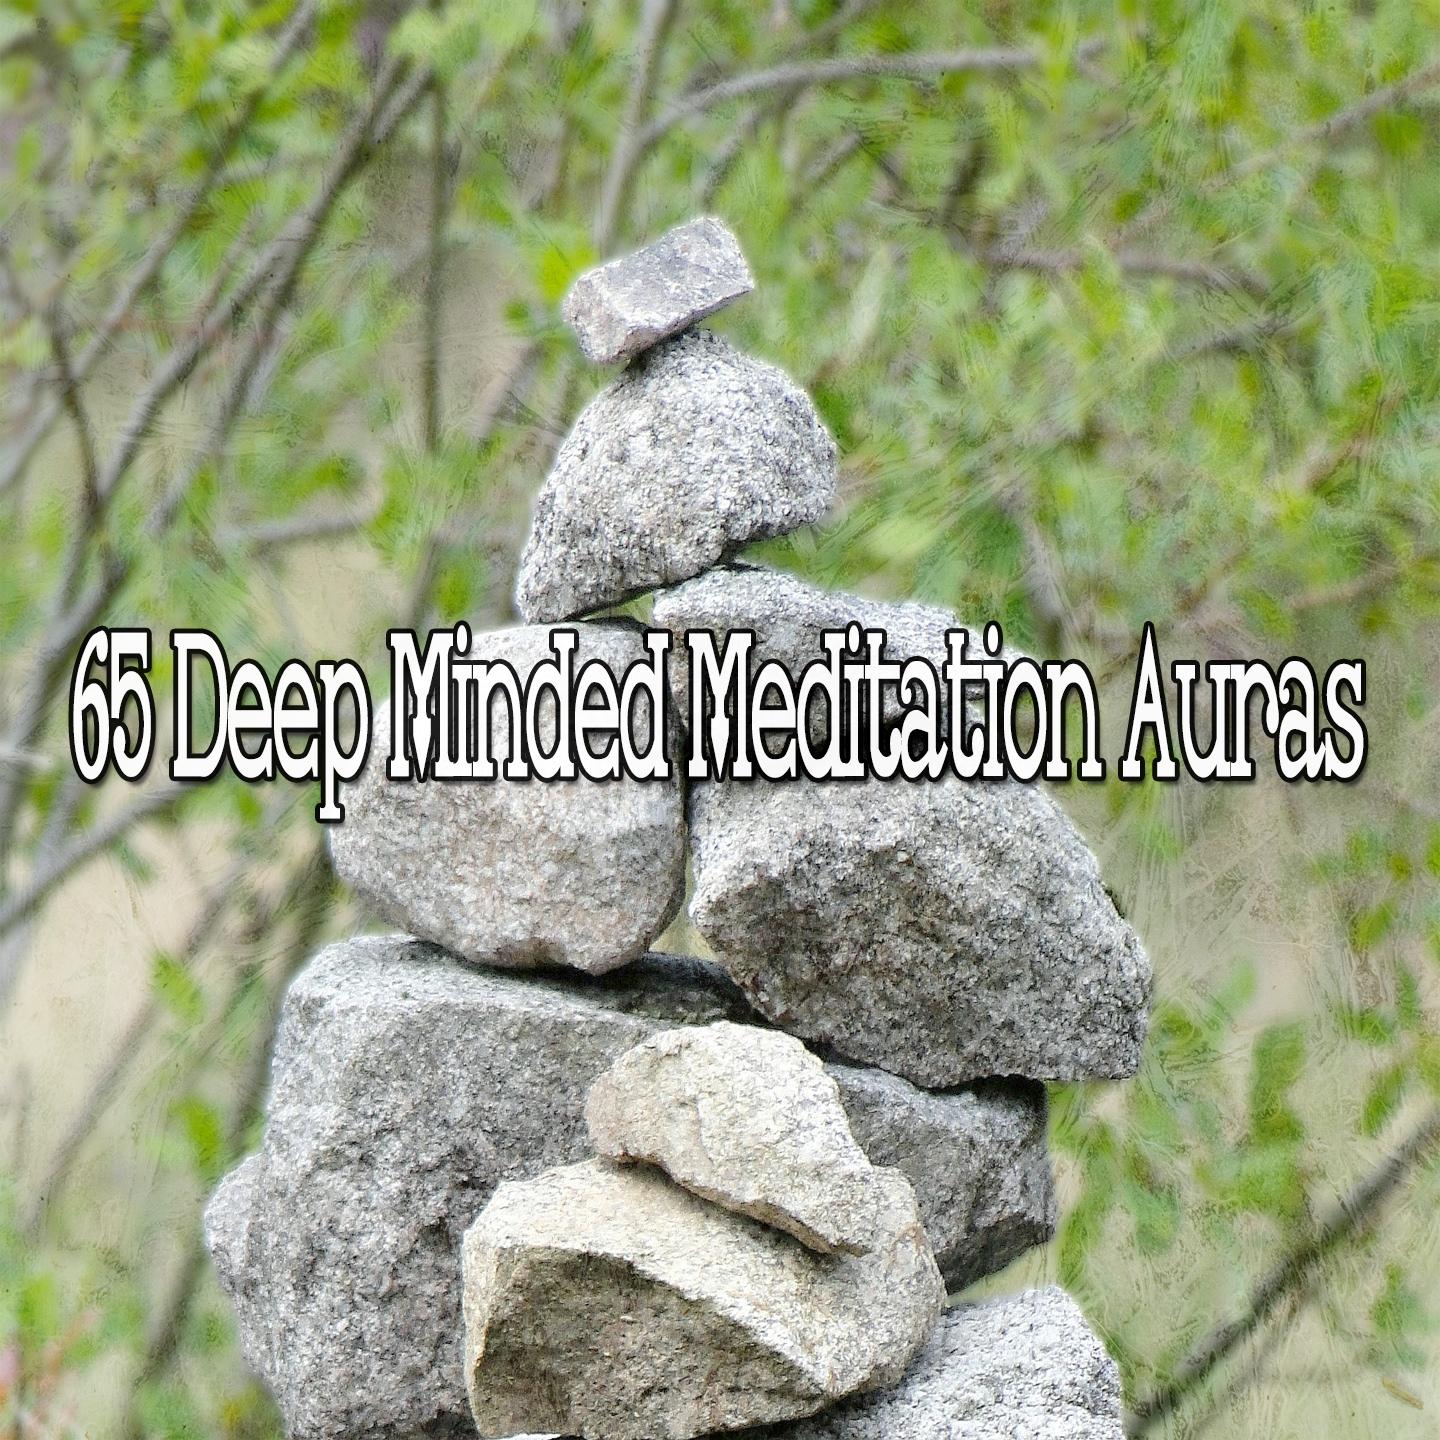 65 Deep Minded Meditation Auras